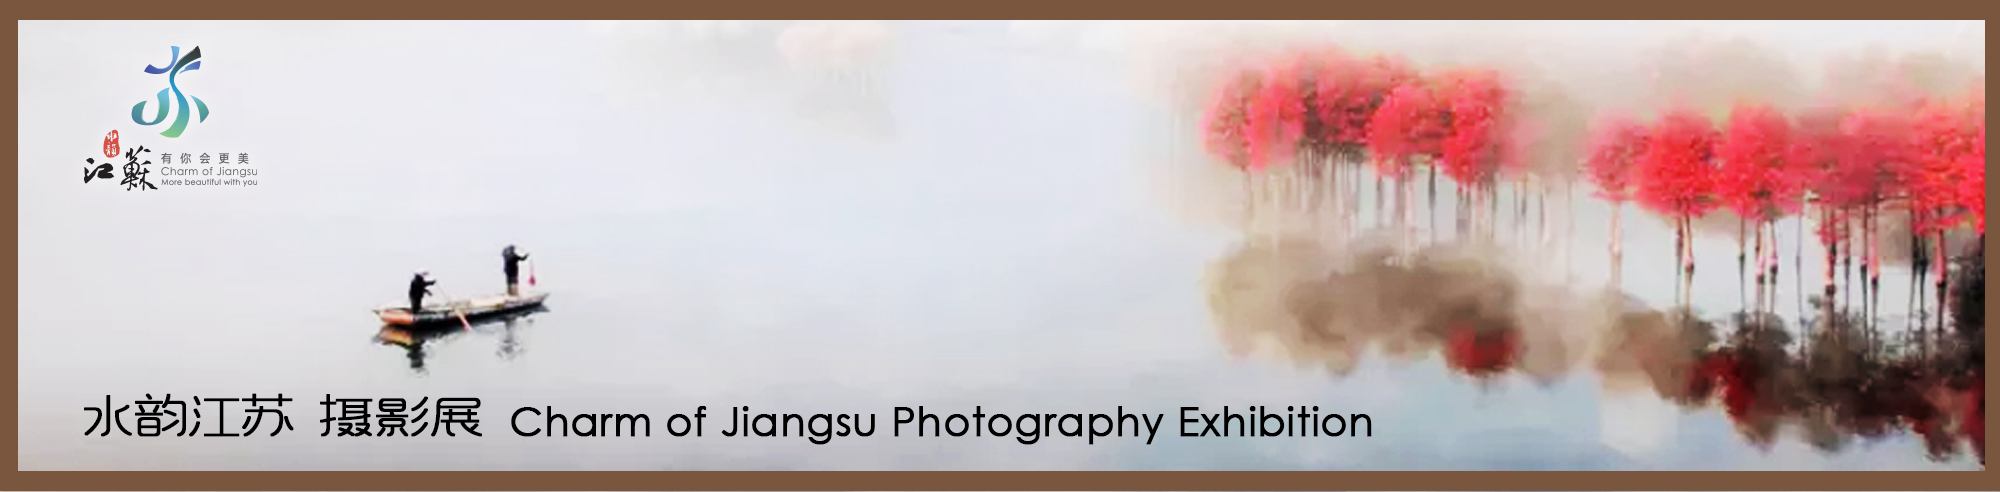 Charm of Jiangsu Photography Exhibition